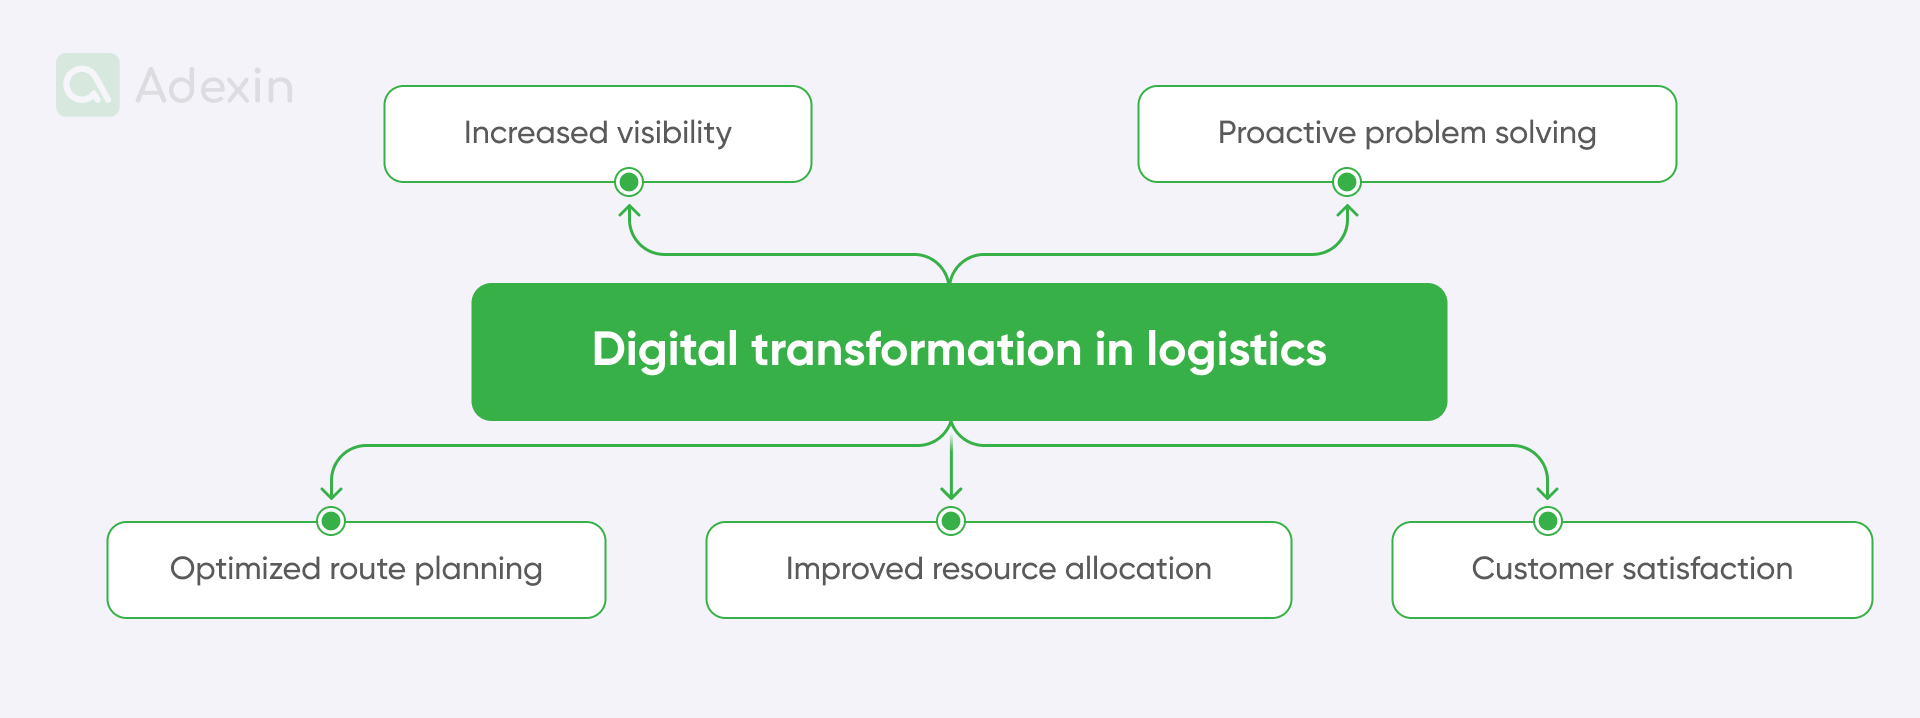 Elements of digital transformation in logistics